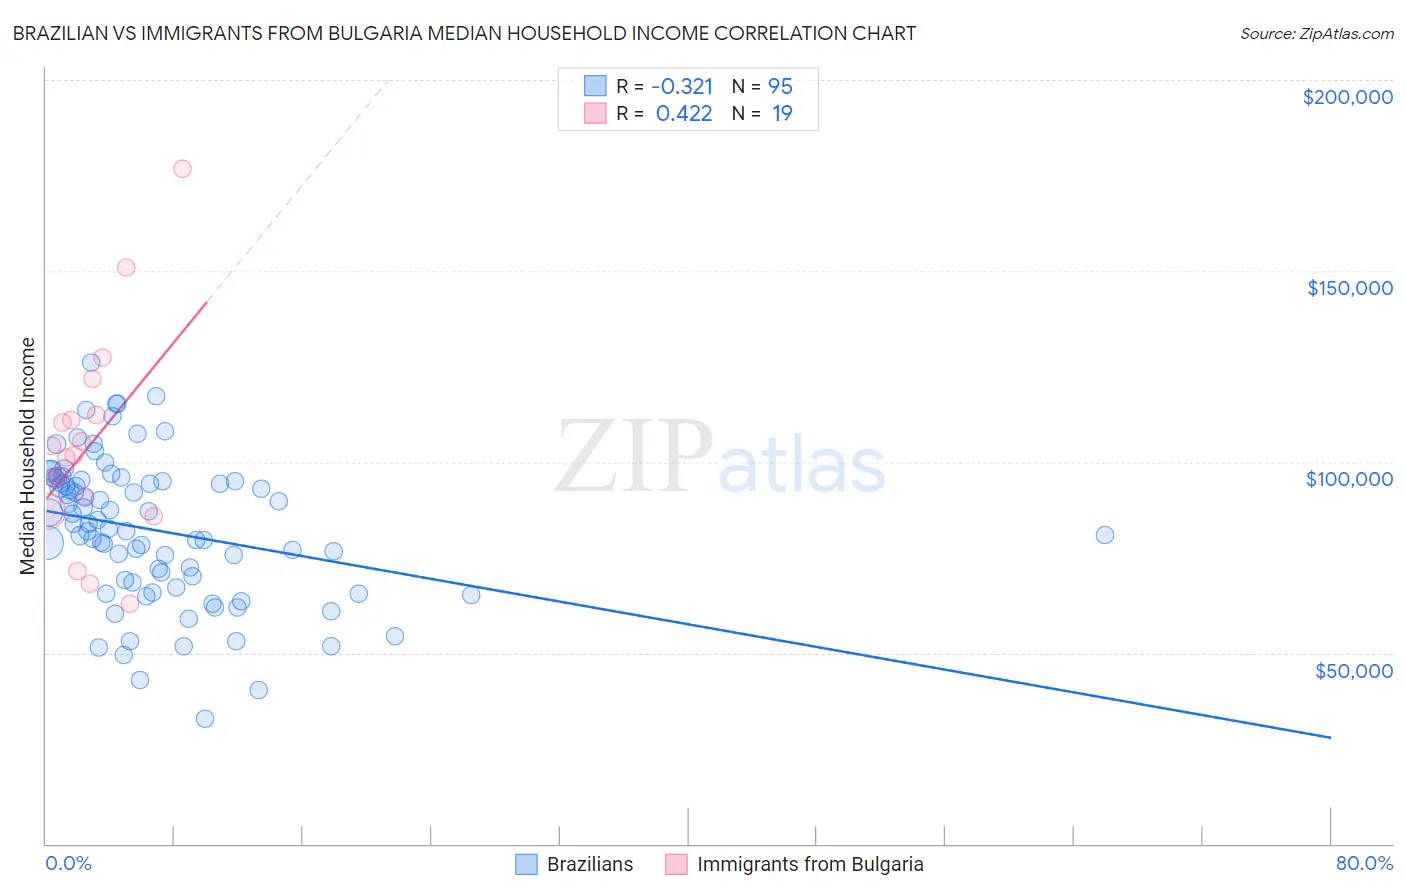 Brazilian vs Immigrants from Bulgaria Median Household Income